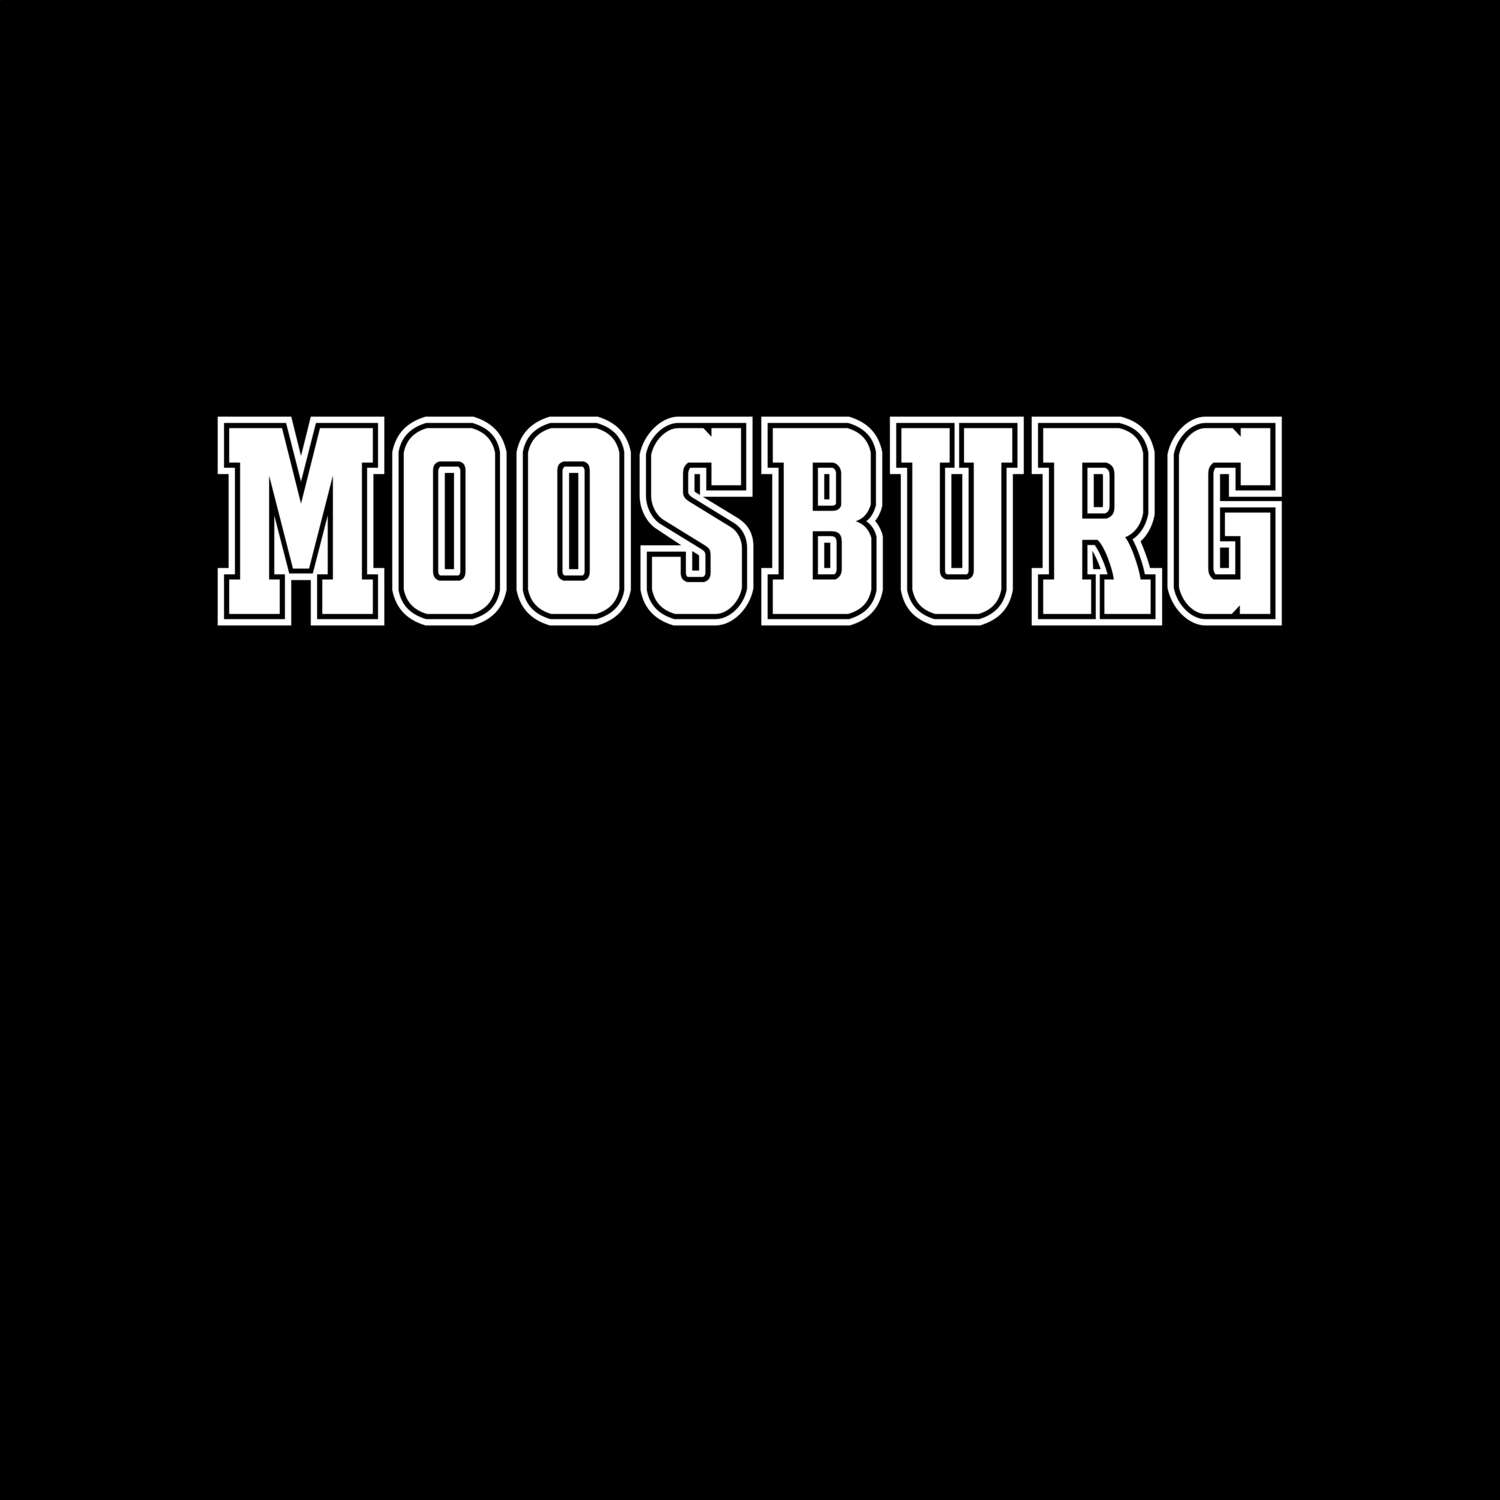 Moosburg T-Shirt »Classic«